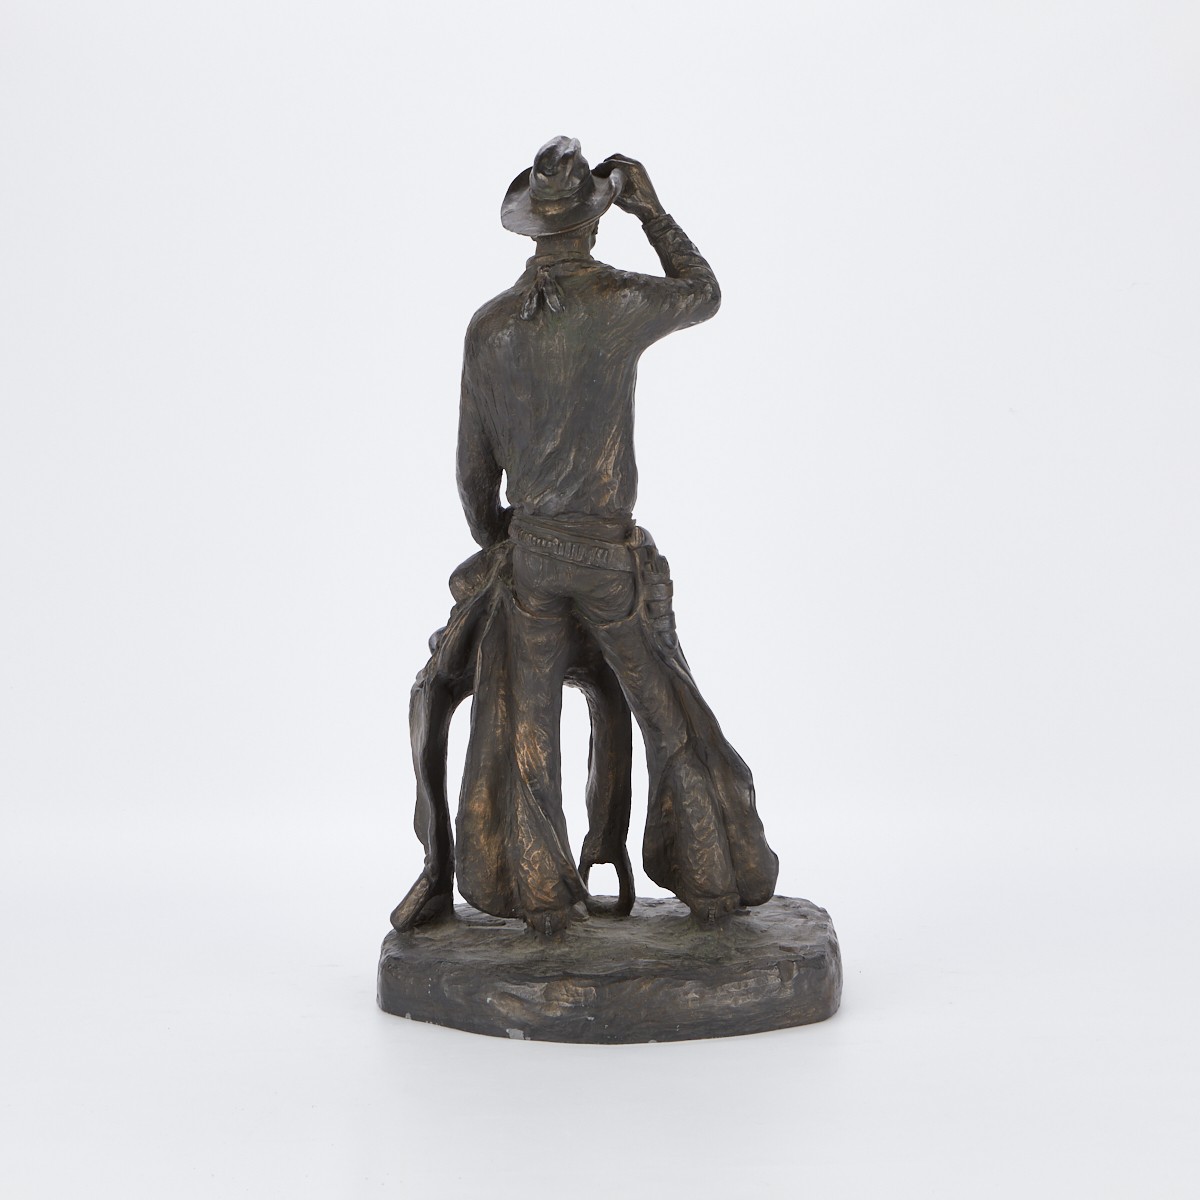 Michael Garman "Saddle Tramp" Cold Cast Bronze Sculpture - Image 4 of 6